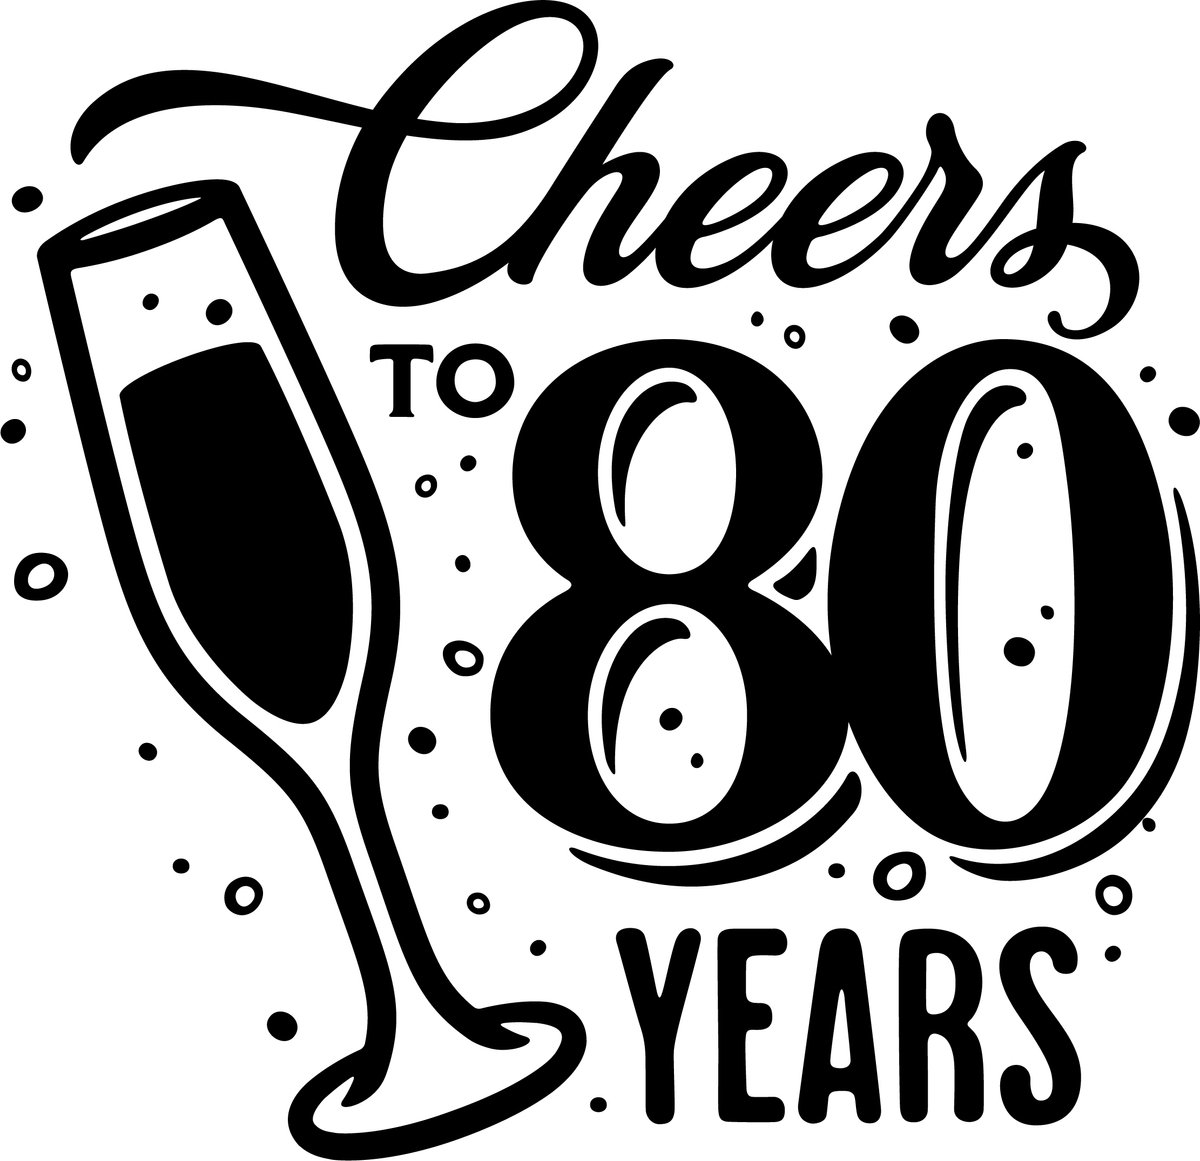 Sticker - Cheers to 80 years - 30x30cm - wit - 1 stuks - stickers - verjaardag - verjaardag decoratie - verjaardag versiering - feest - feest versiering - feestartikelen - raamstickers - raamsticker - Stickers volwassenen